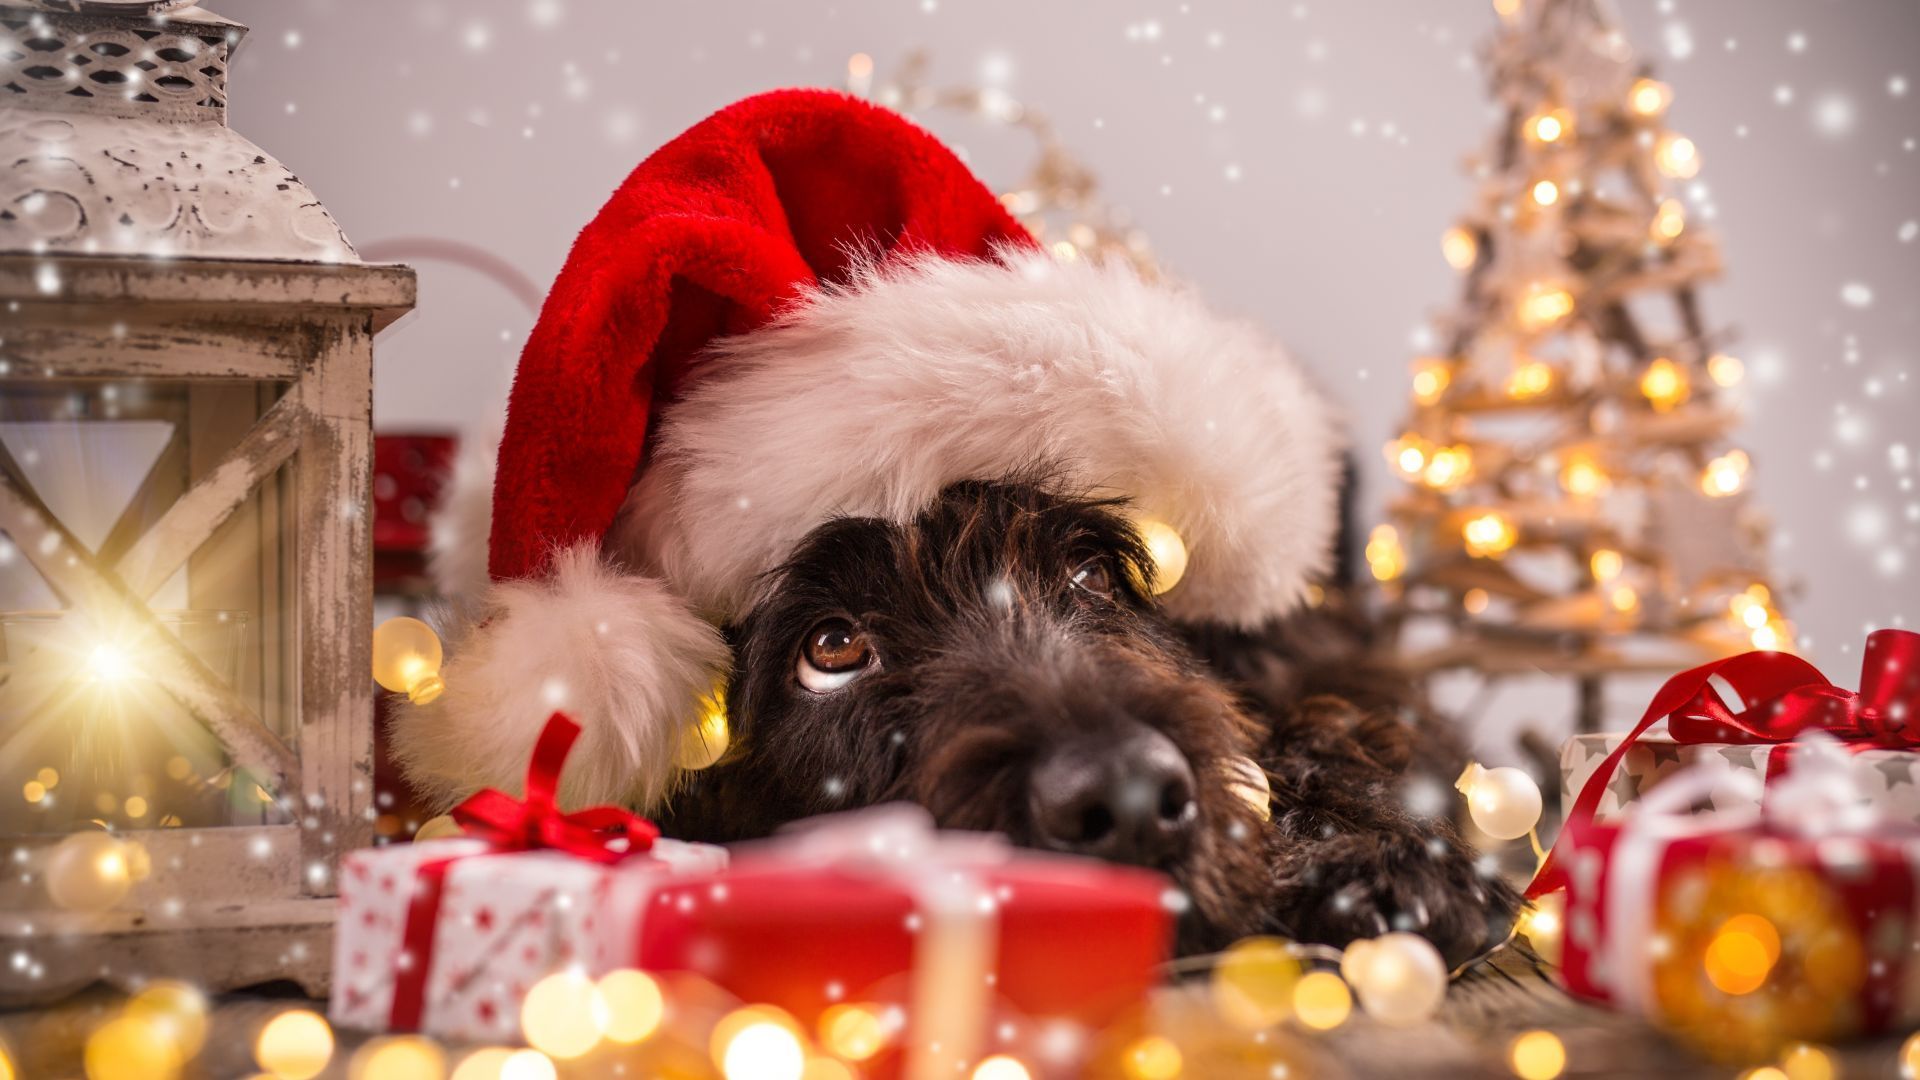 Christmas, New Year, snow, dog, cute animals, 4k (horizontal). Christmas animals, Christmas dog, Animal wallpaper